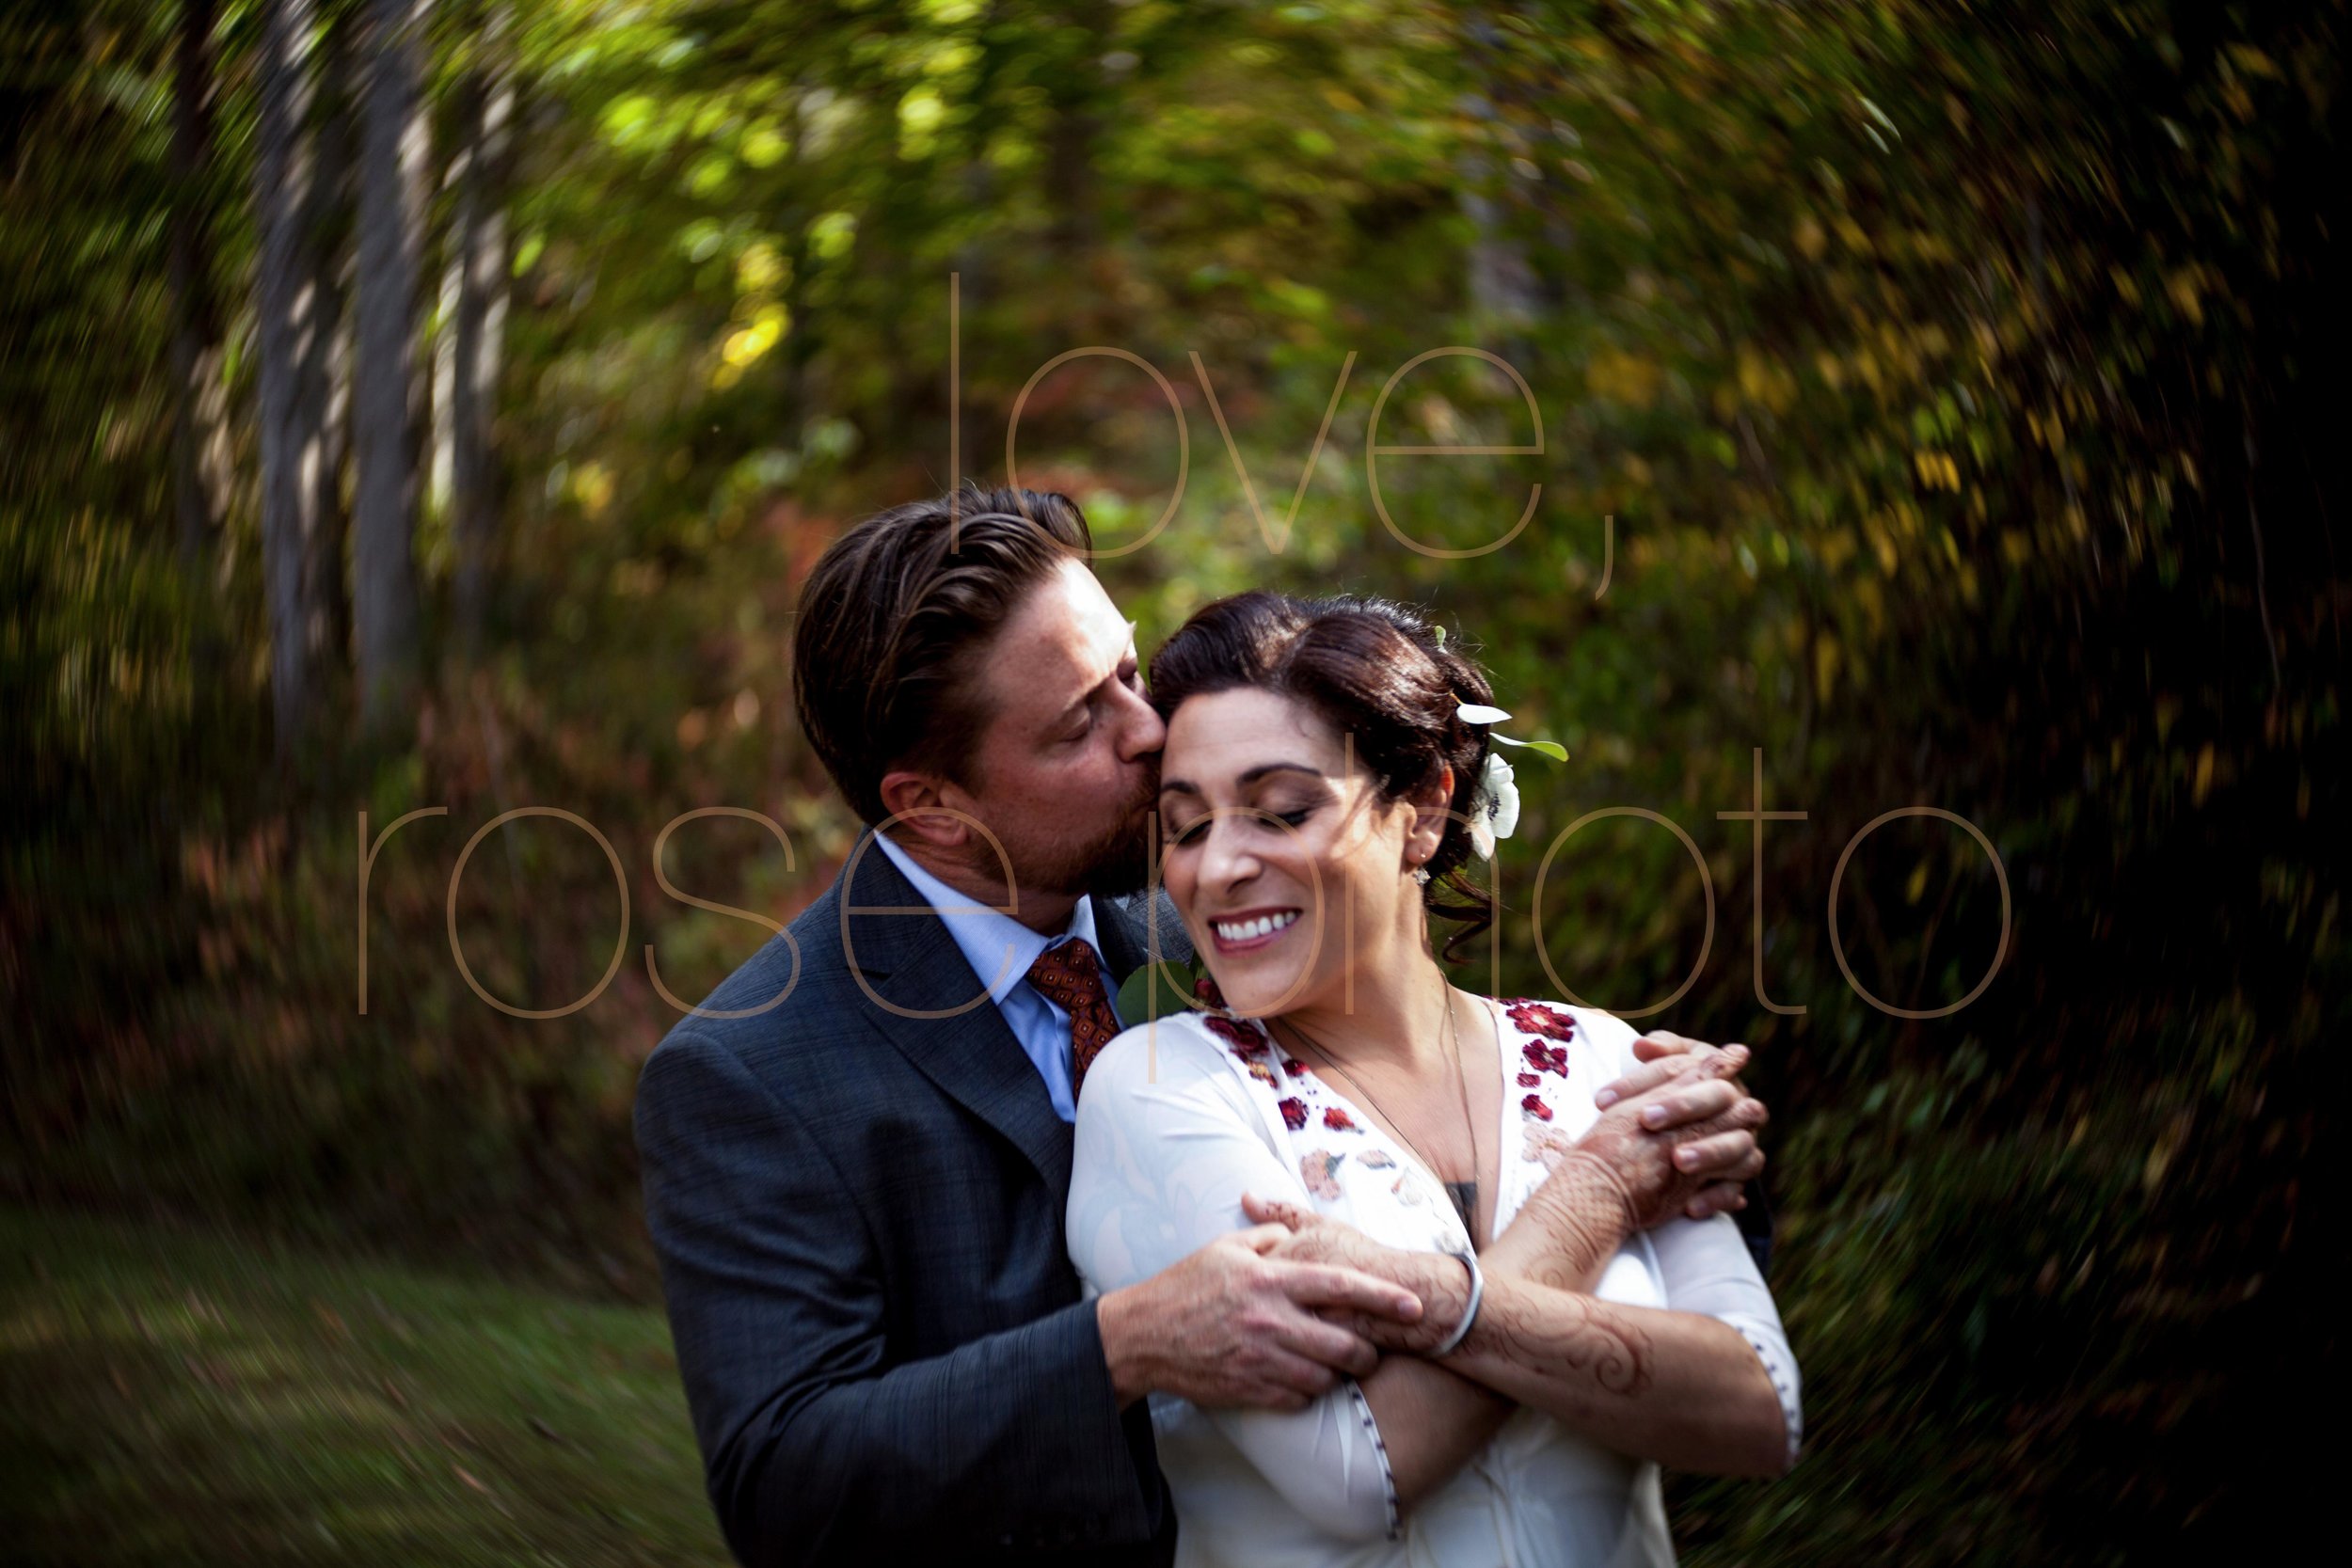 Jane Krame + Jason Ashevegas married asheville best wedding photographers -24.jpg